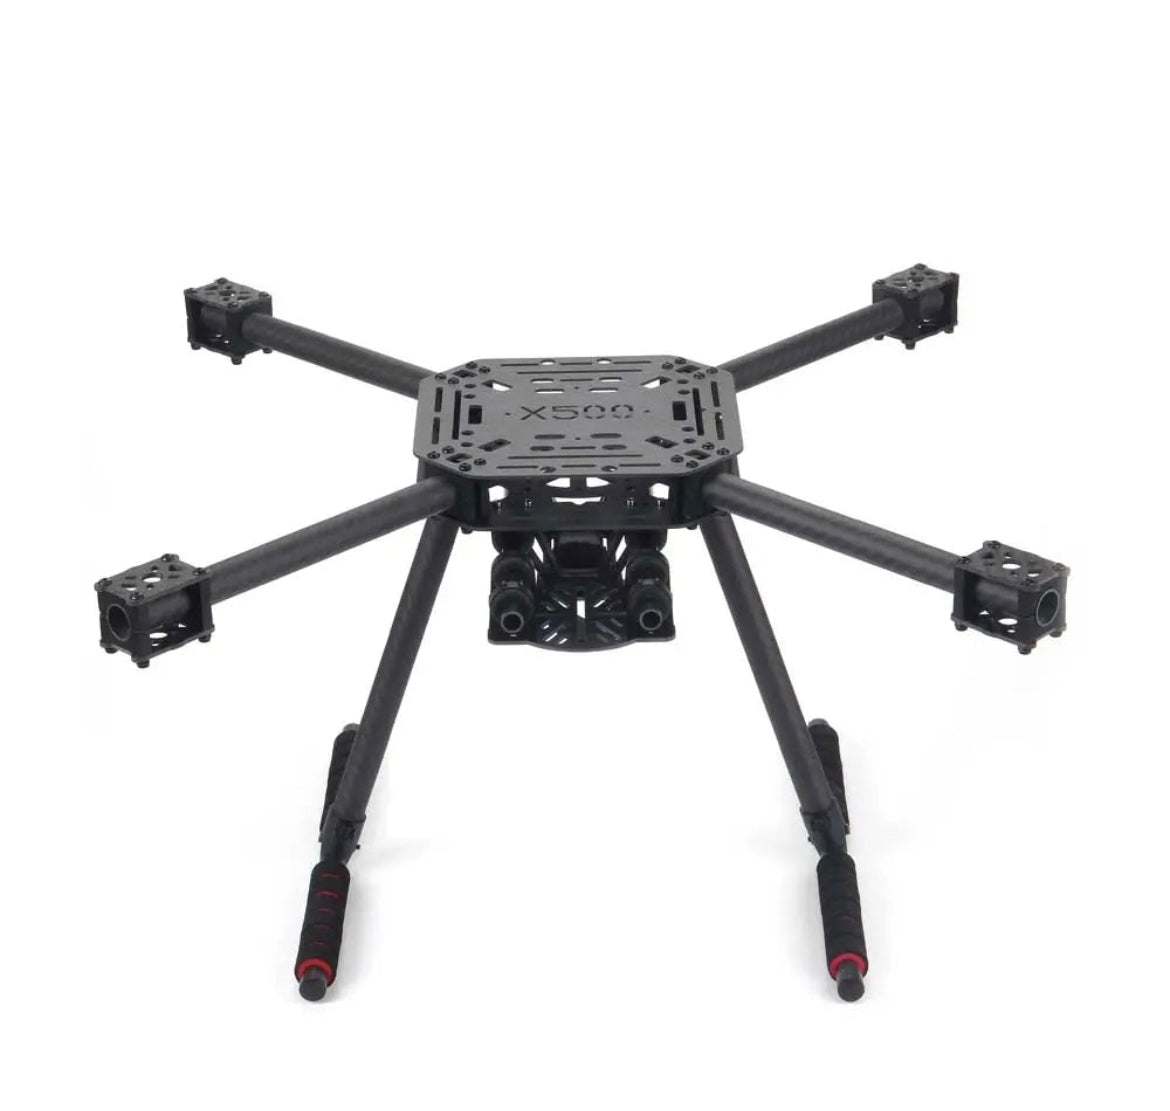 Holybro X500 480mm Wheelbase 10 Inch Frame Kit for RC Drone